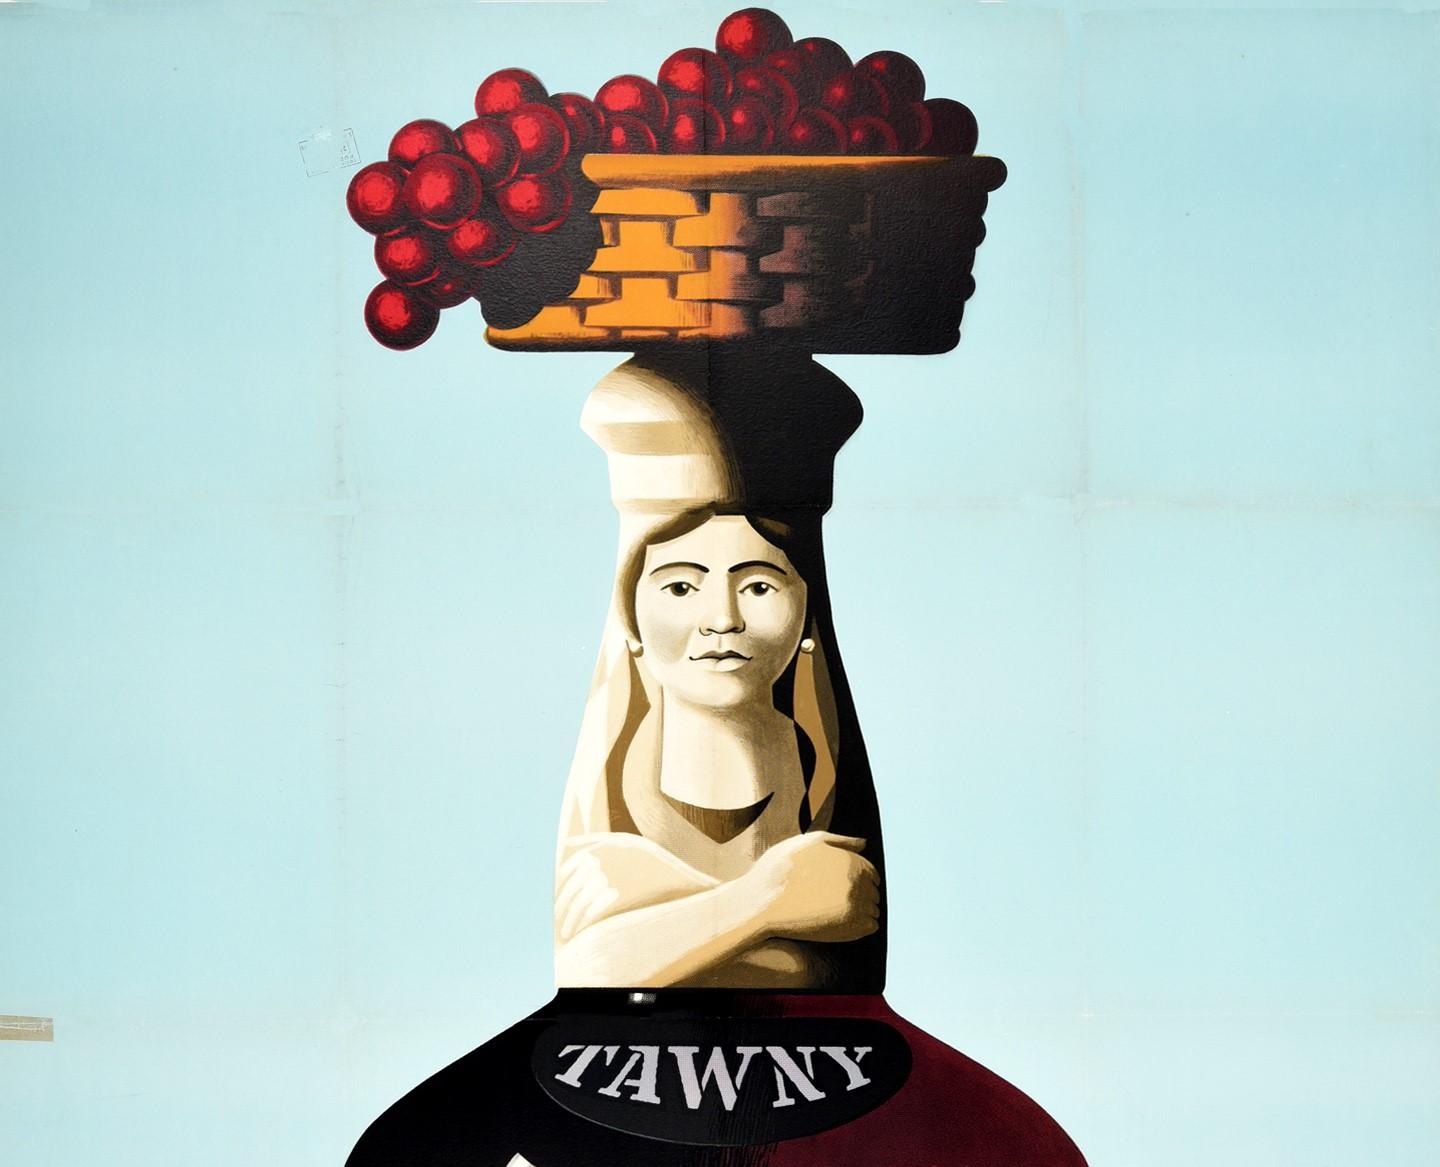 Original Vintage Drink Advertising Poster Tawny Rozes Port Wine Portugal Oporto - Print by Gabor